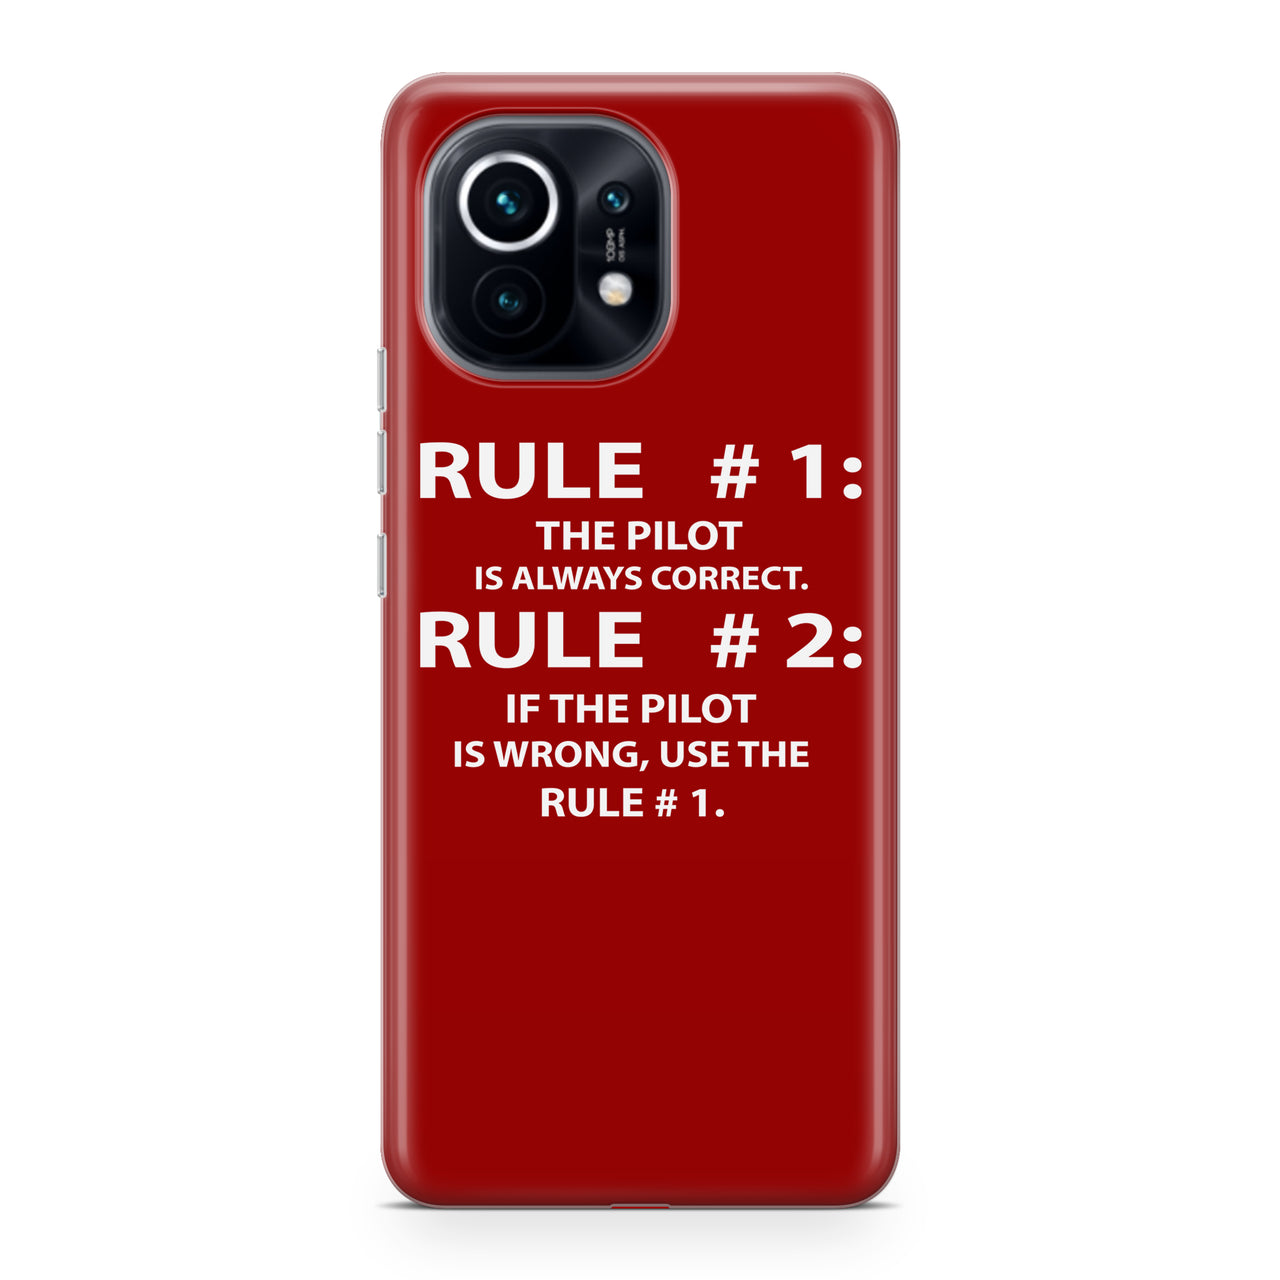 Rule 1 - Pilot is Always Correct Designed Xiaomi Cases